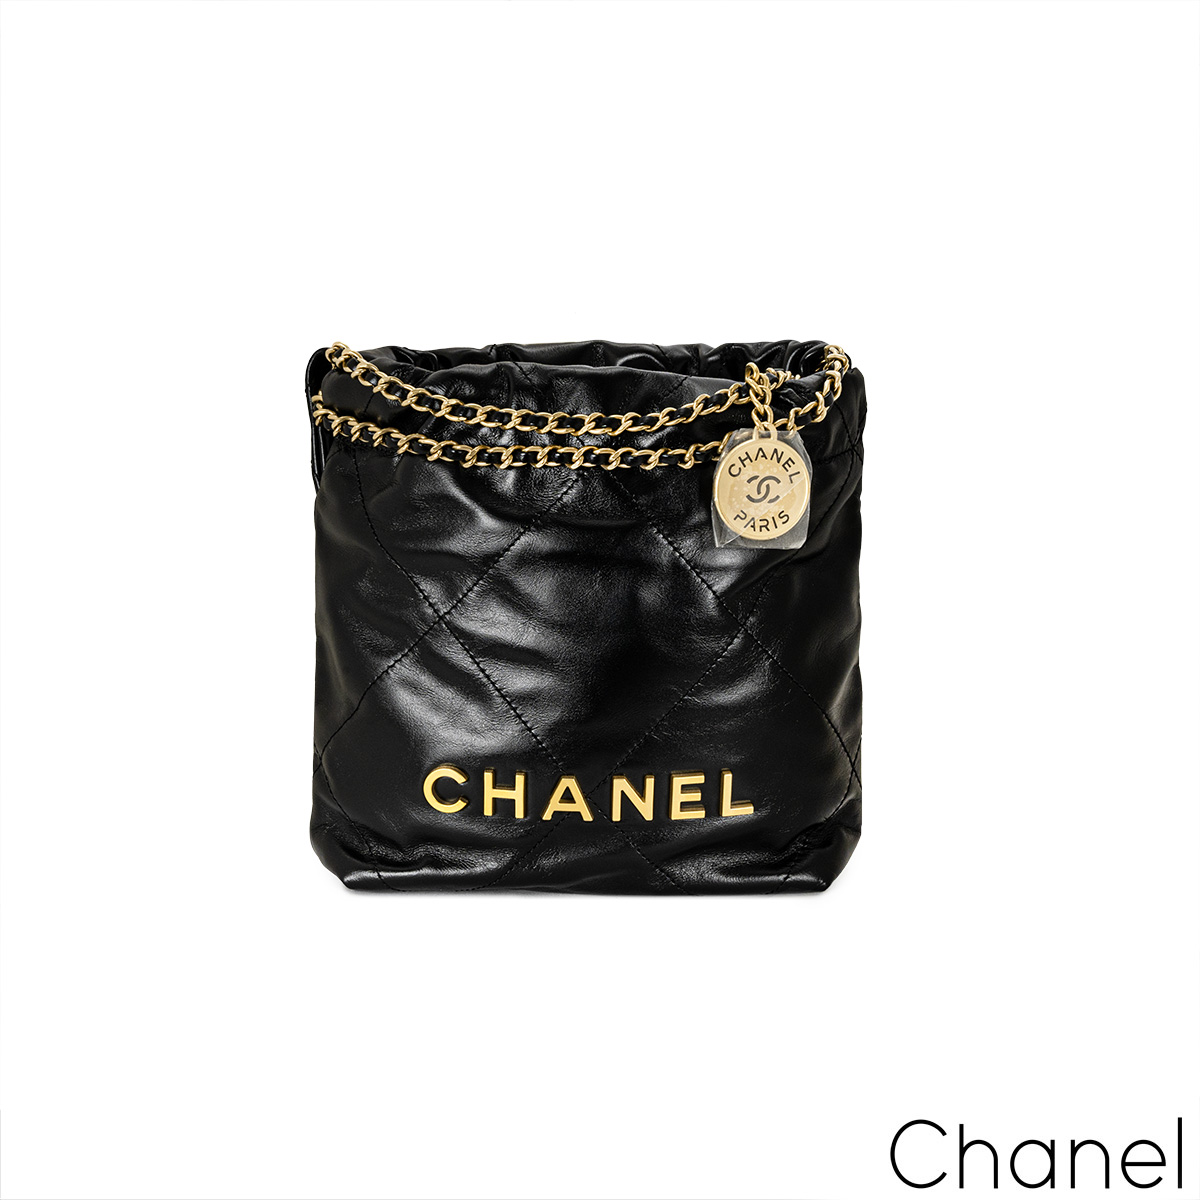 Chanel Jewellery & Handbags